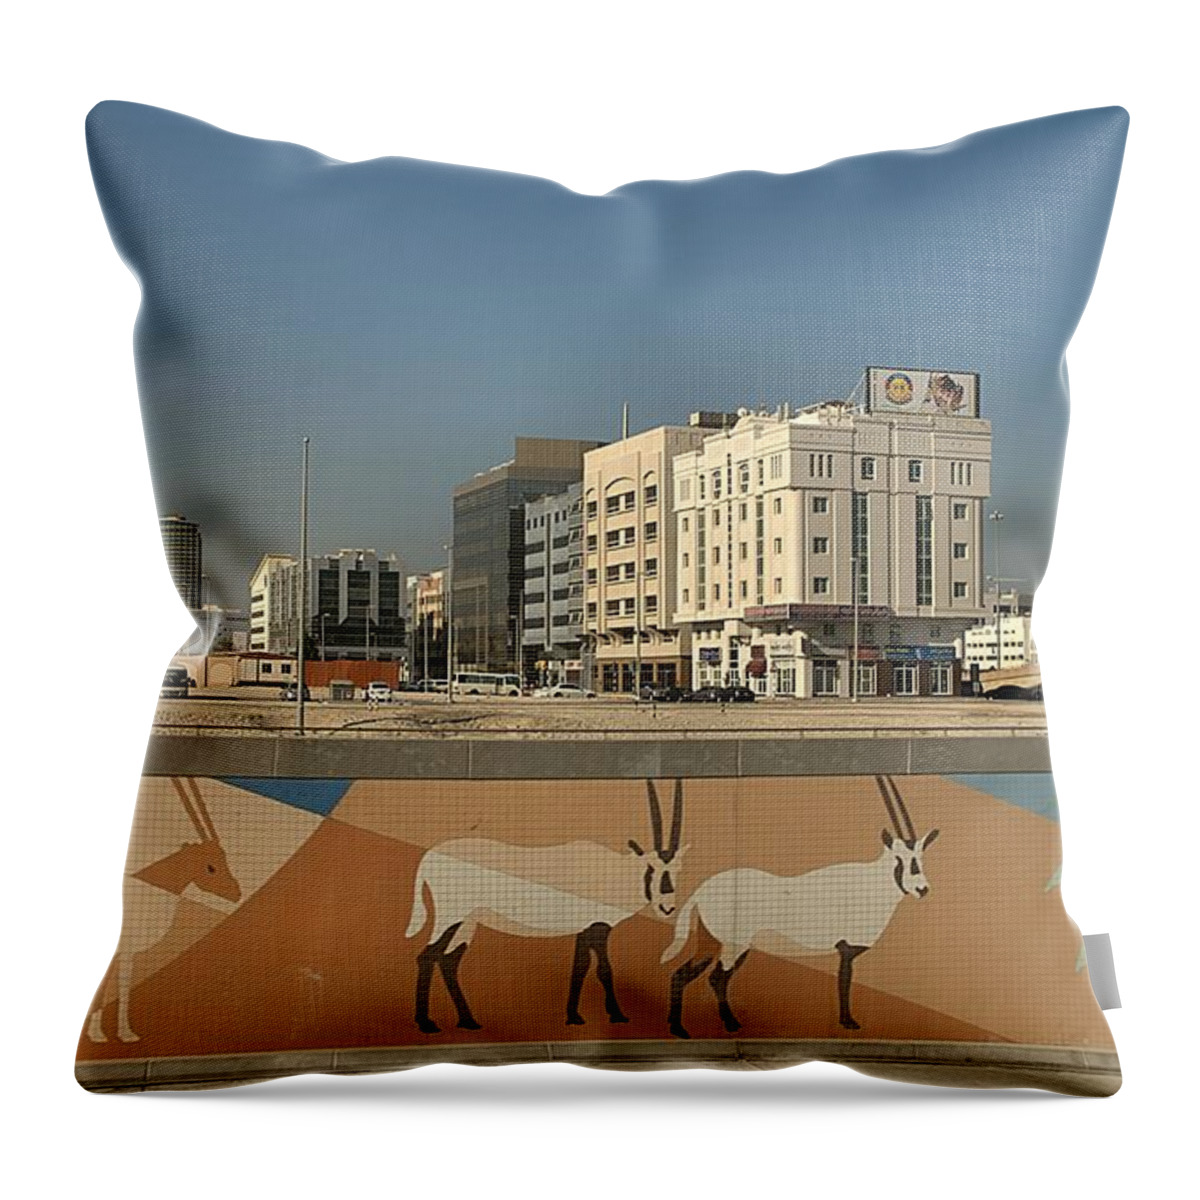 Abu Dhabi Throw Pillow featuring the photograph Abu Dhabi Outskirts by Steven Richman